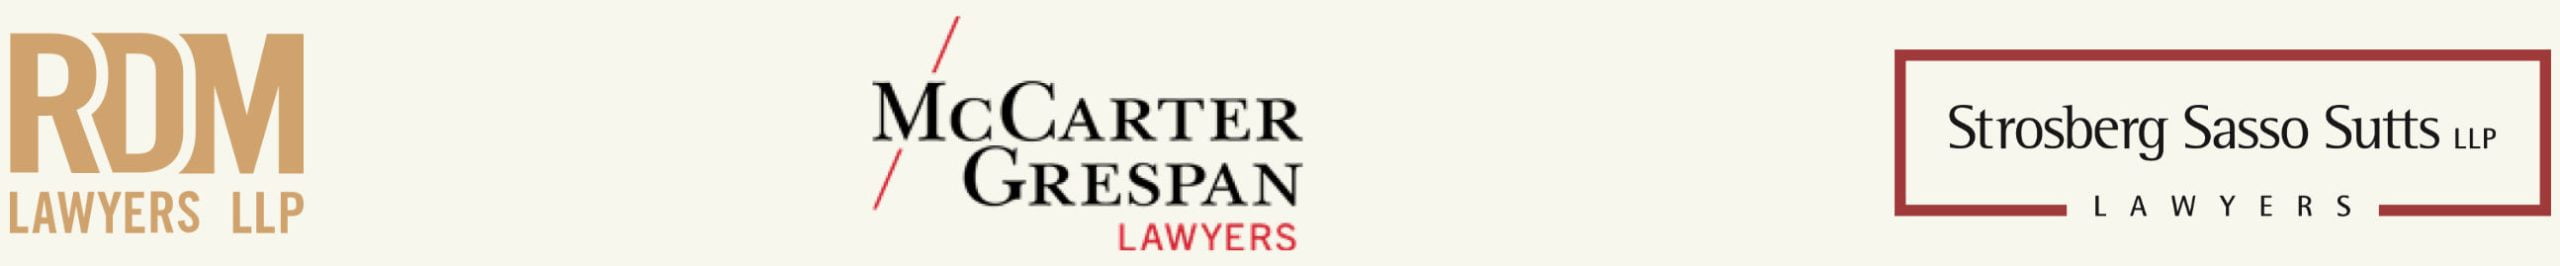 Lawyer Firm Logos